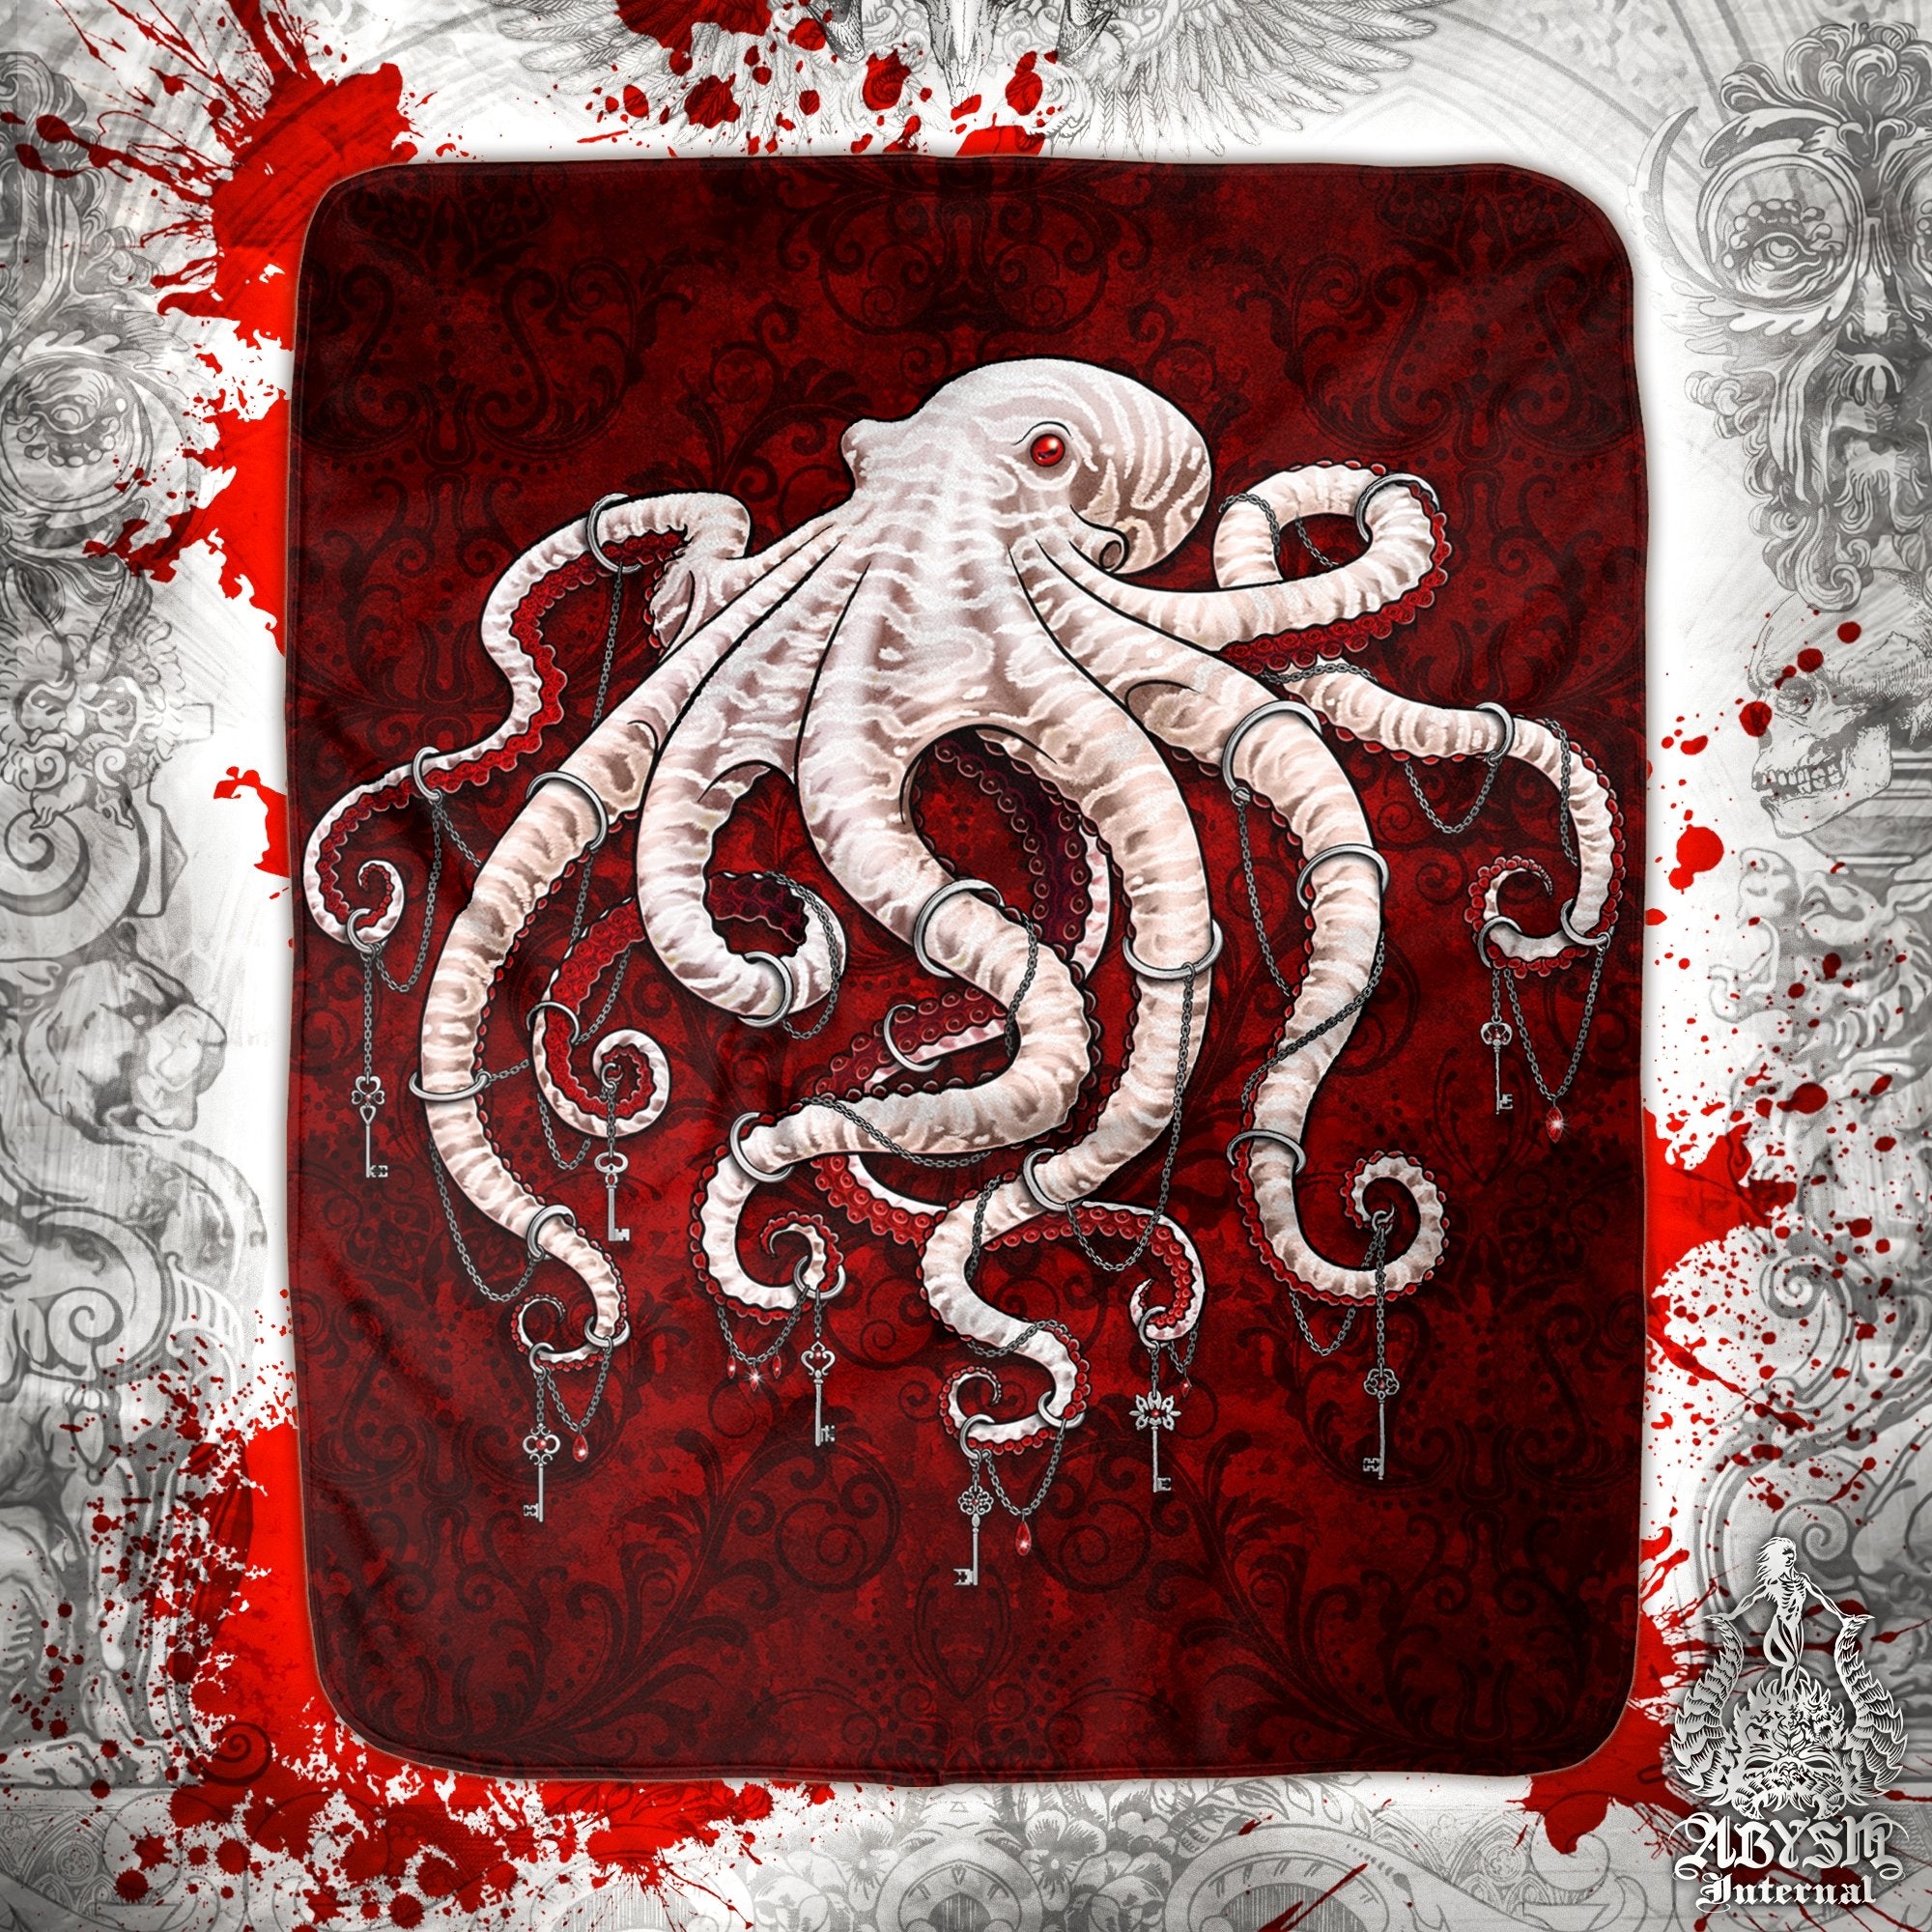 Octopus Throw Fleece Blanket, Gothic Gift, Goth Home Decor - Bloody Red - Abysm Internal